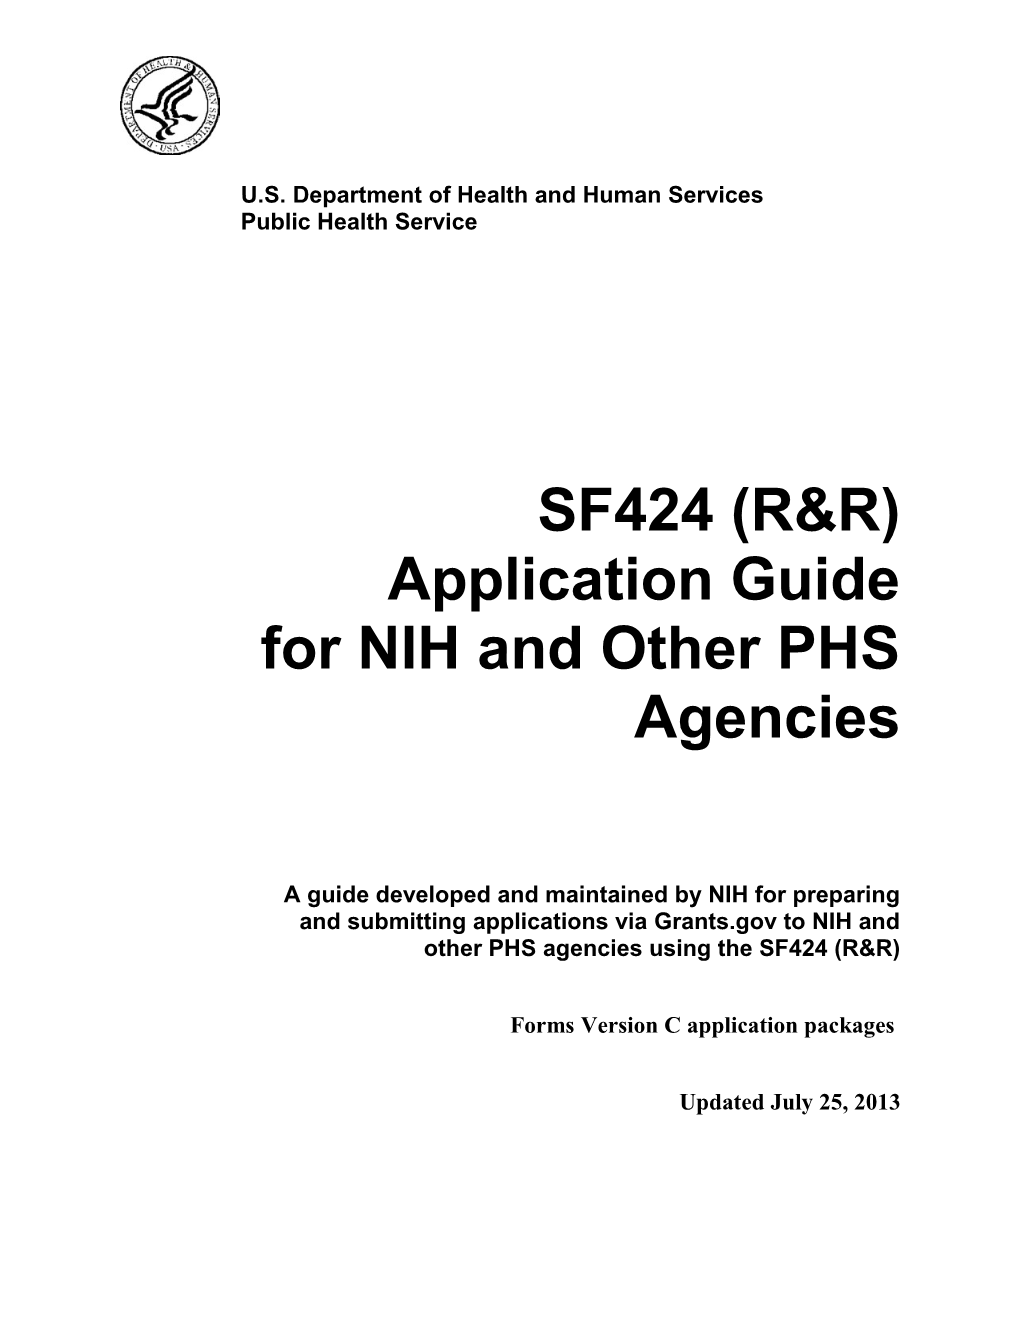 NIH SF424 R&R Application Guide For Adobe Forms Version C